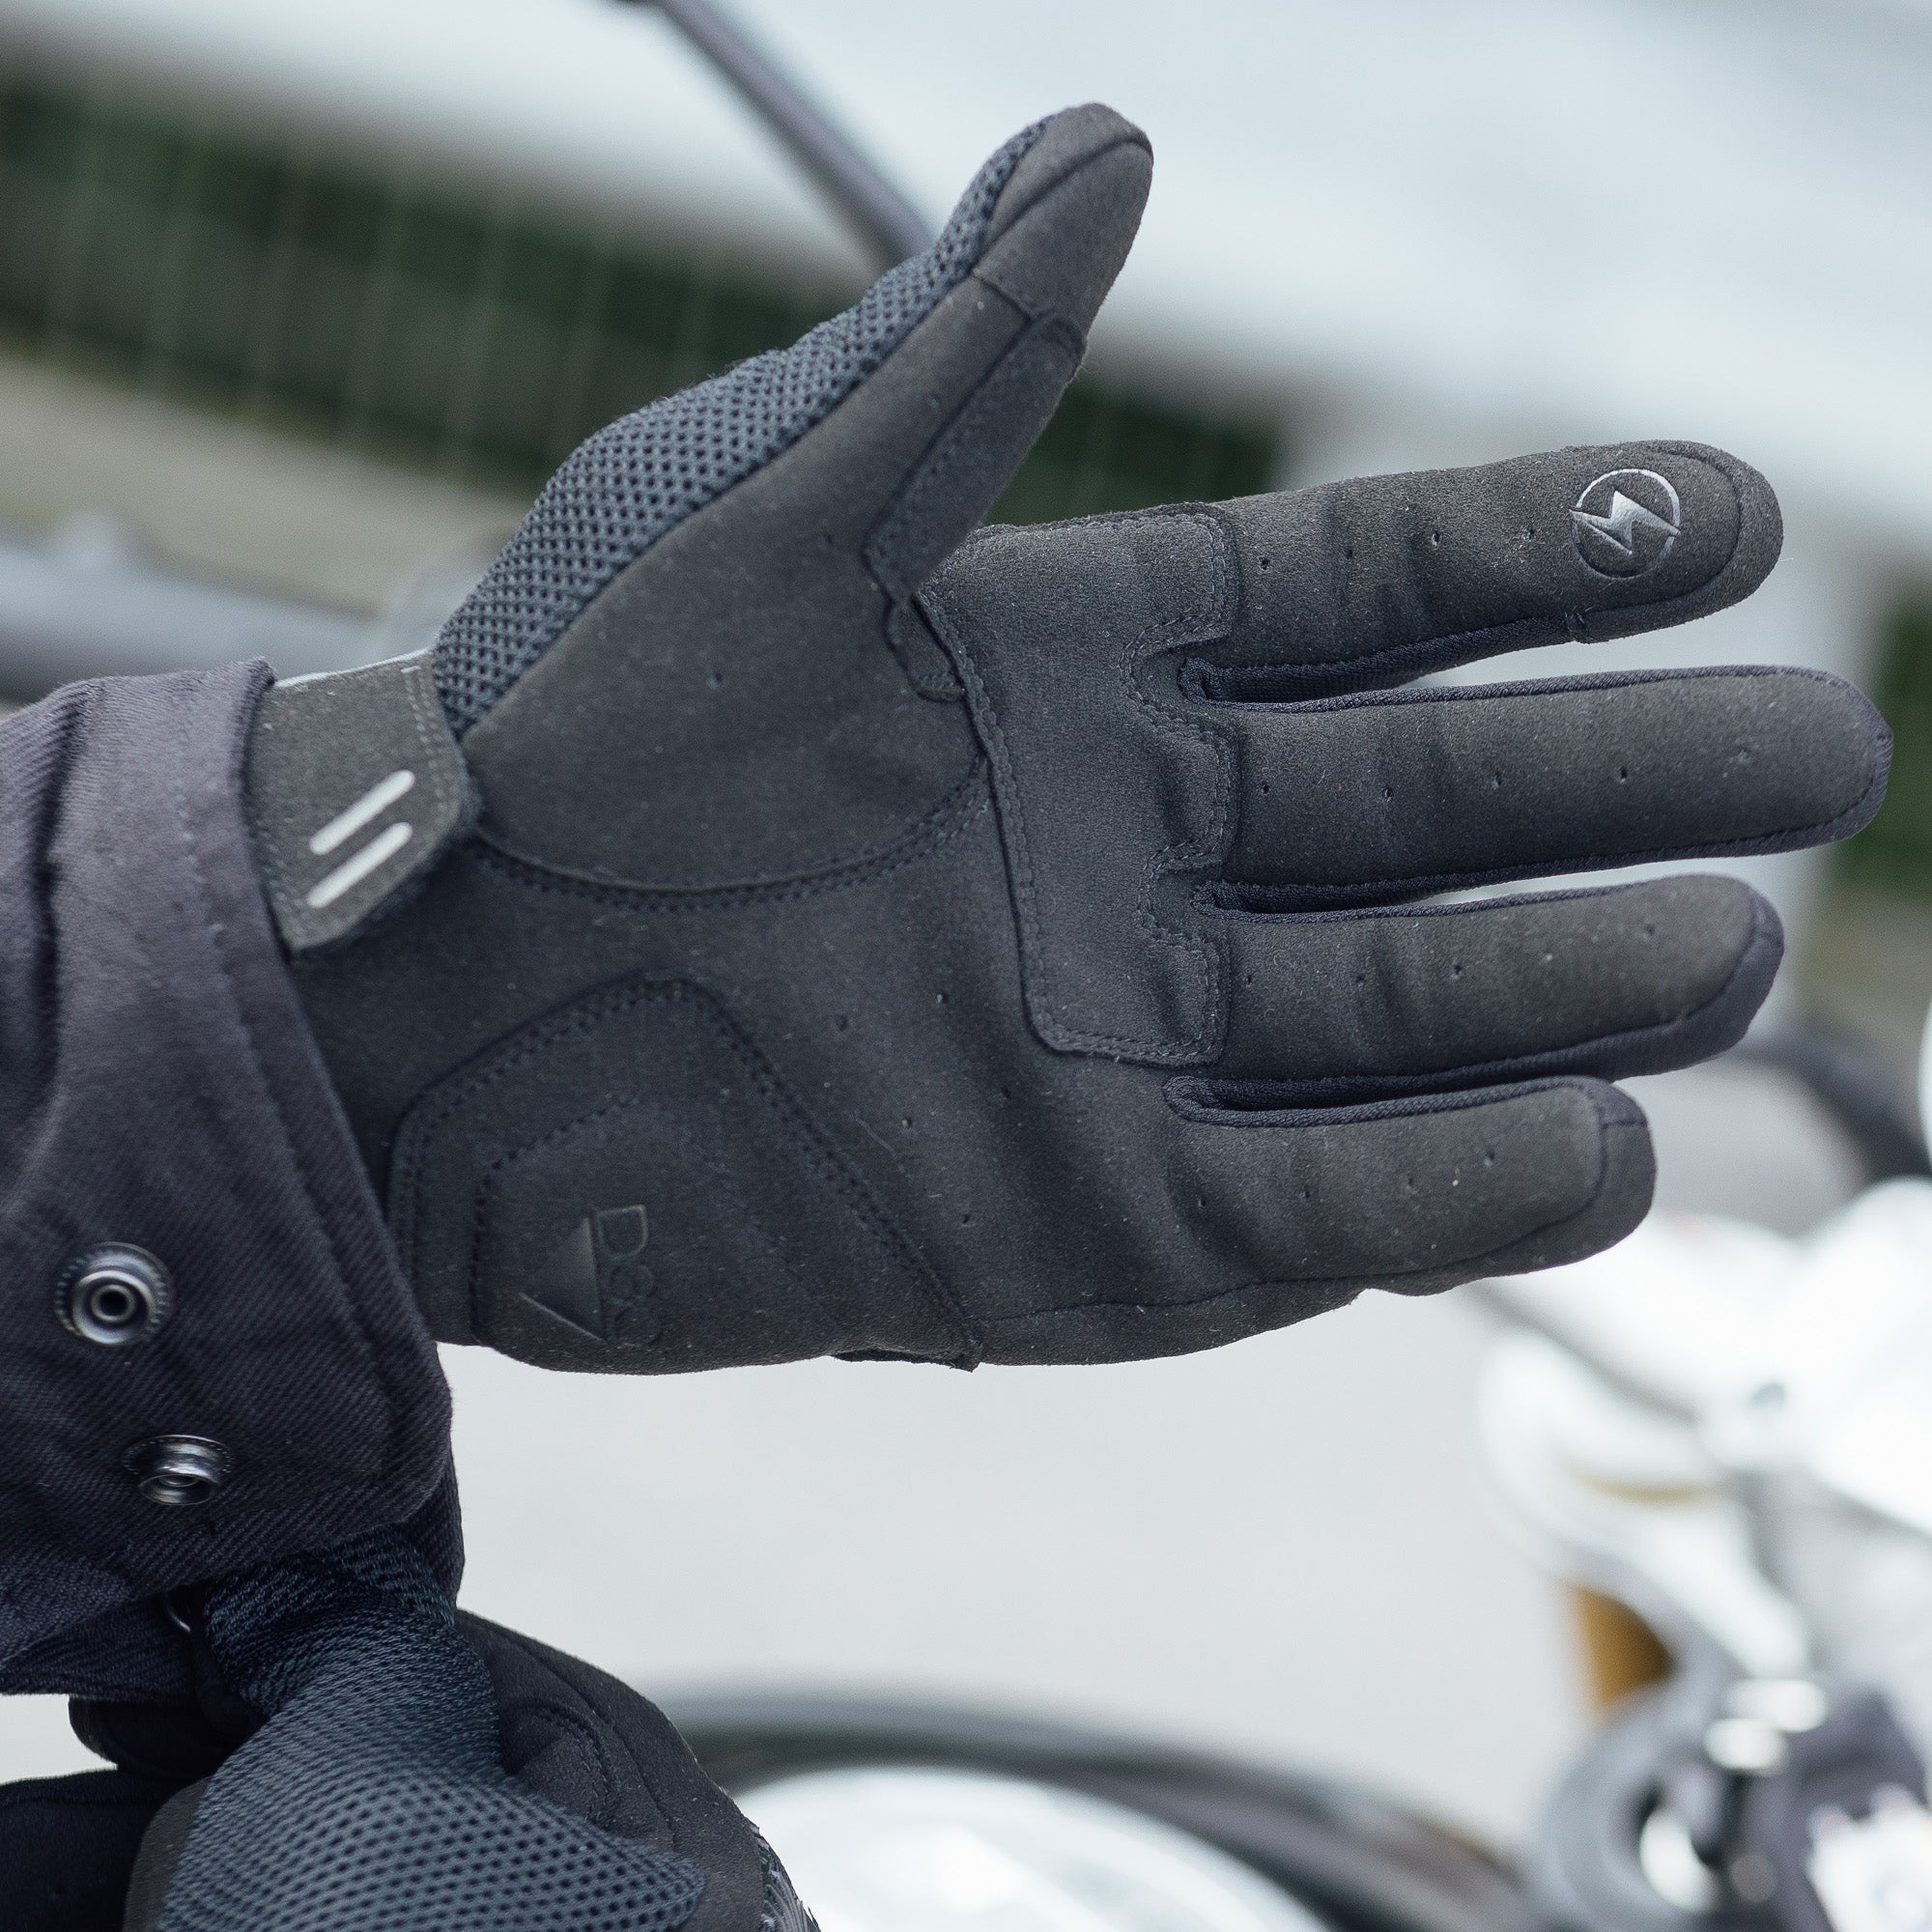 Merlin Barrett mesh D3O® glove black